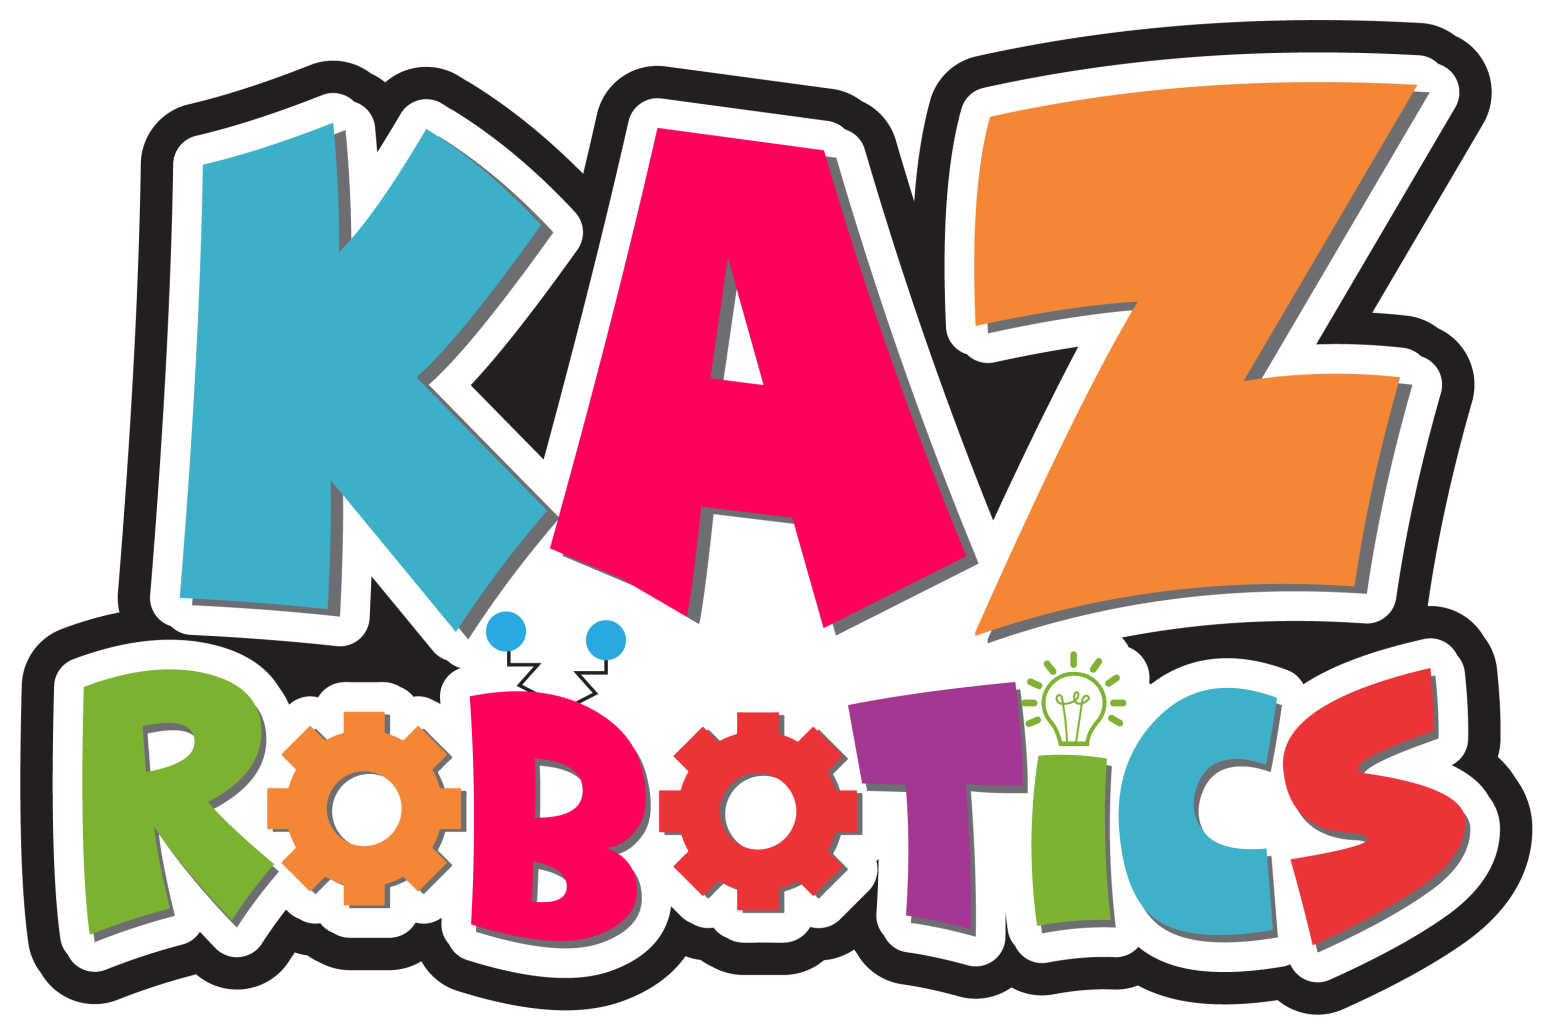 KazRoboticsLogo-new